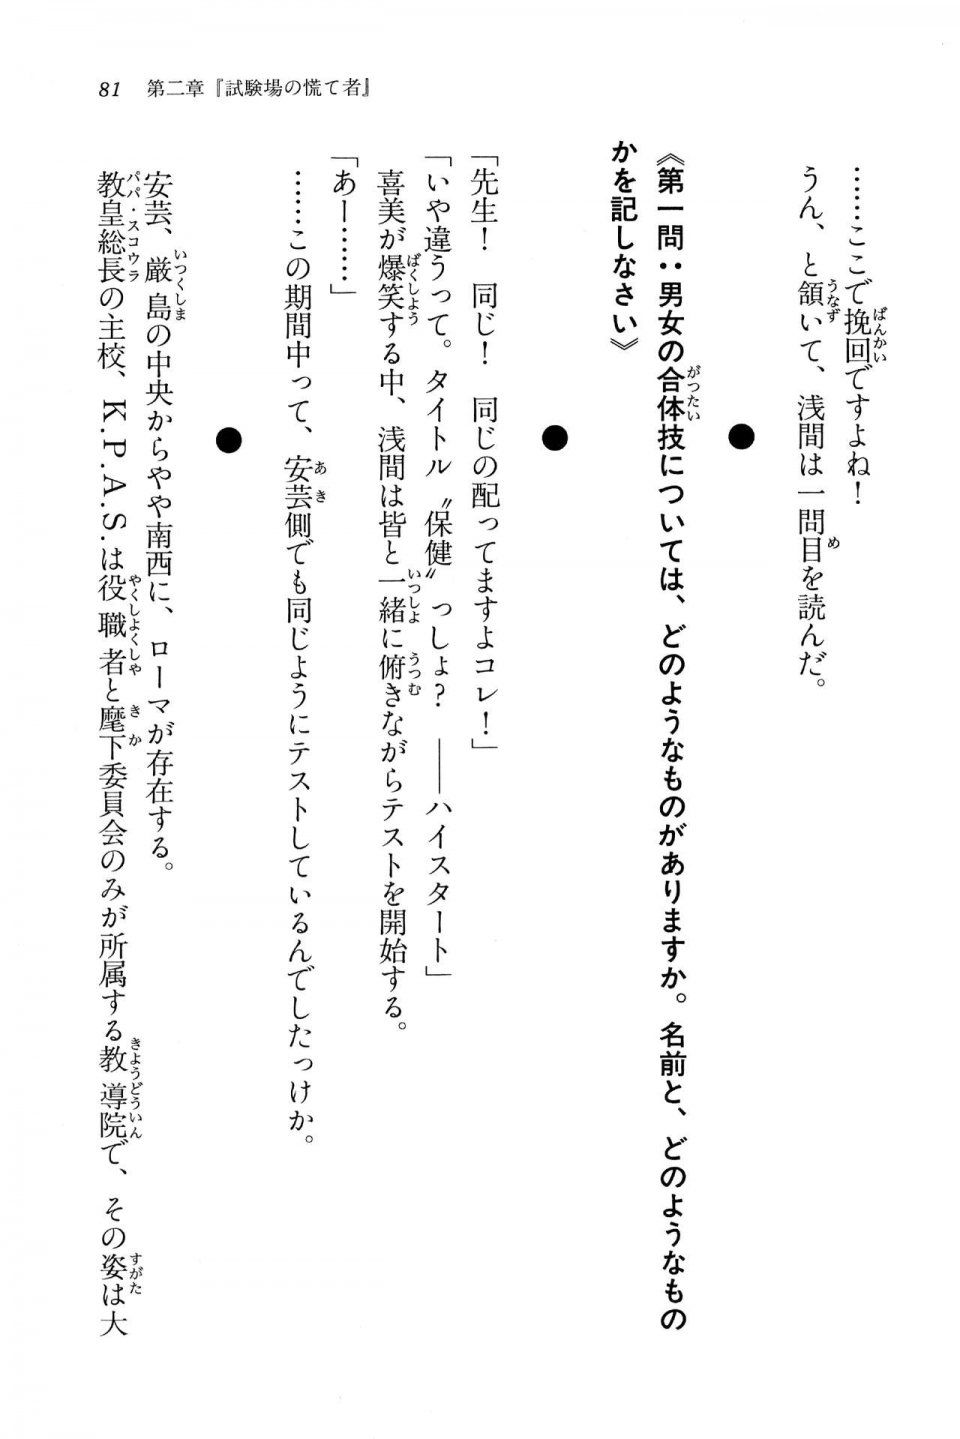 Kyoukai Senjou no Horizon BD Special Mininovel Vol 7(4A) - Photo #85